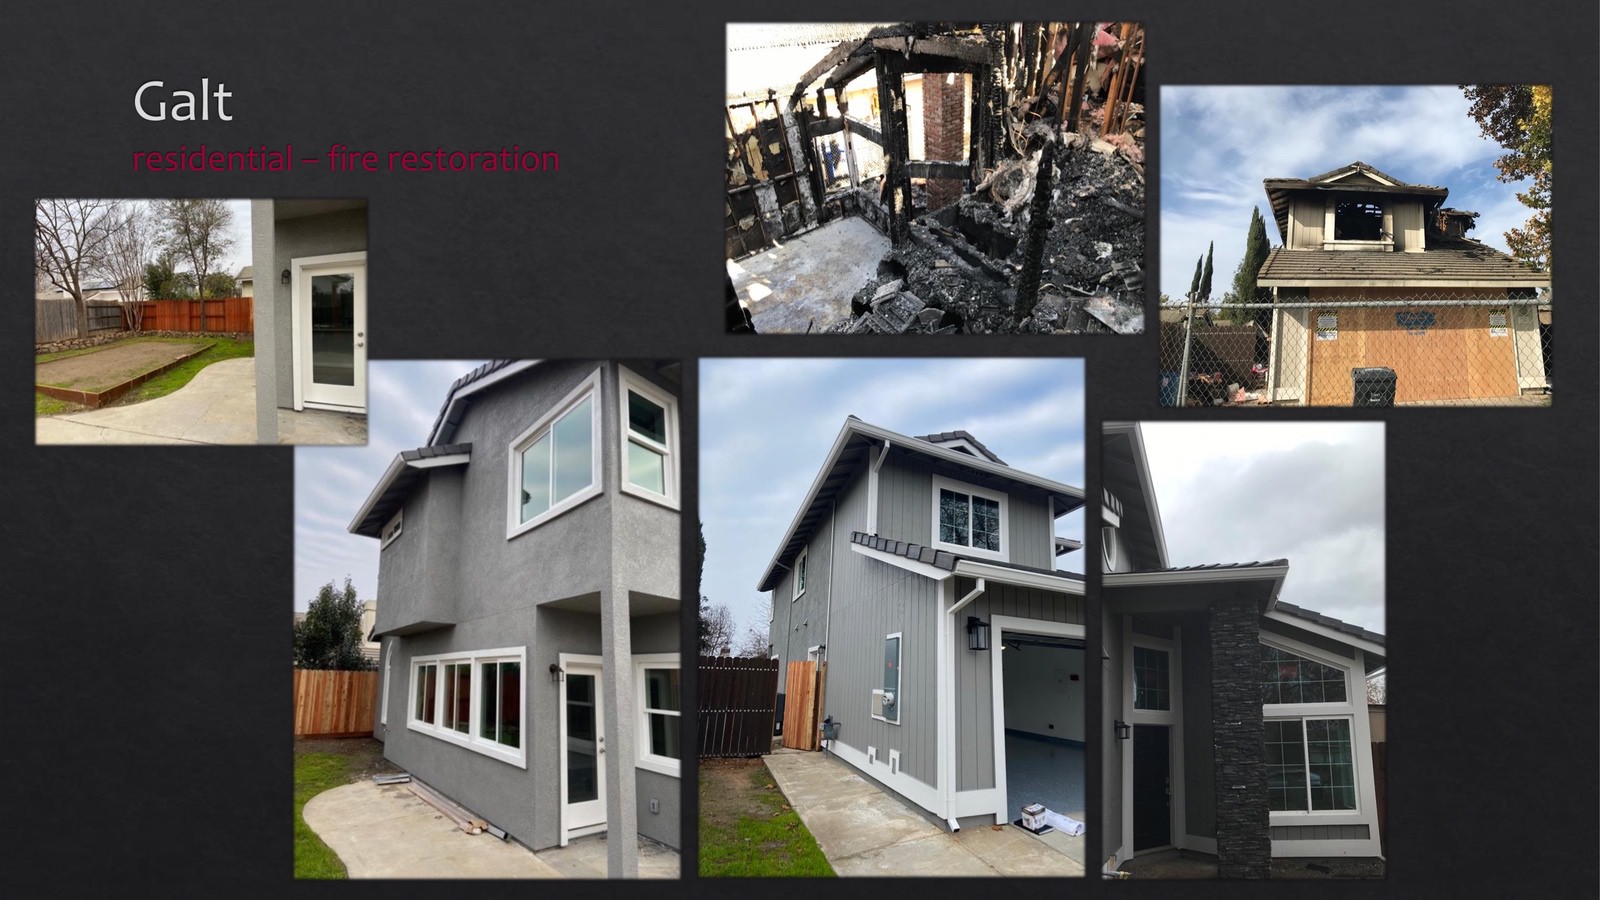 Galt Residential fire restoration - front + side of house - lightbox